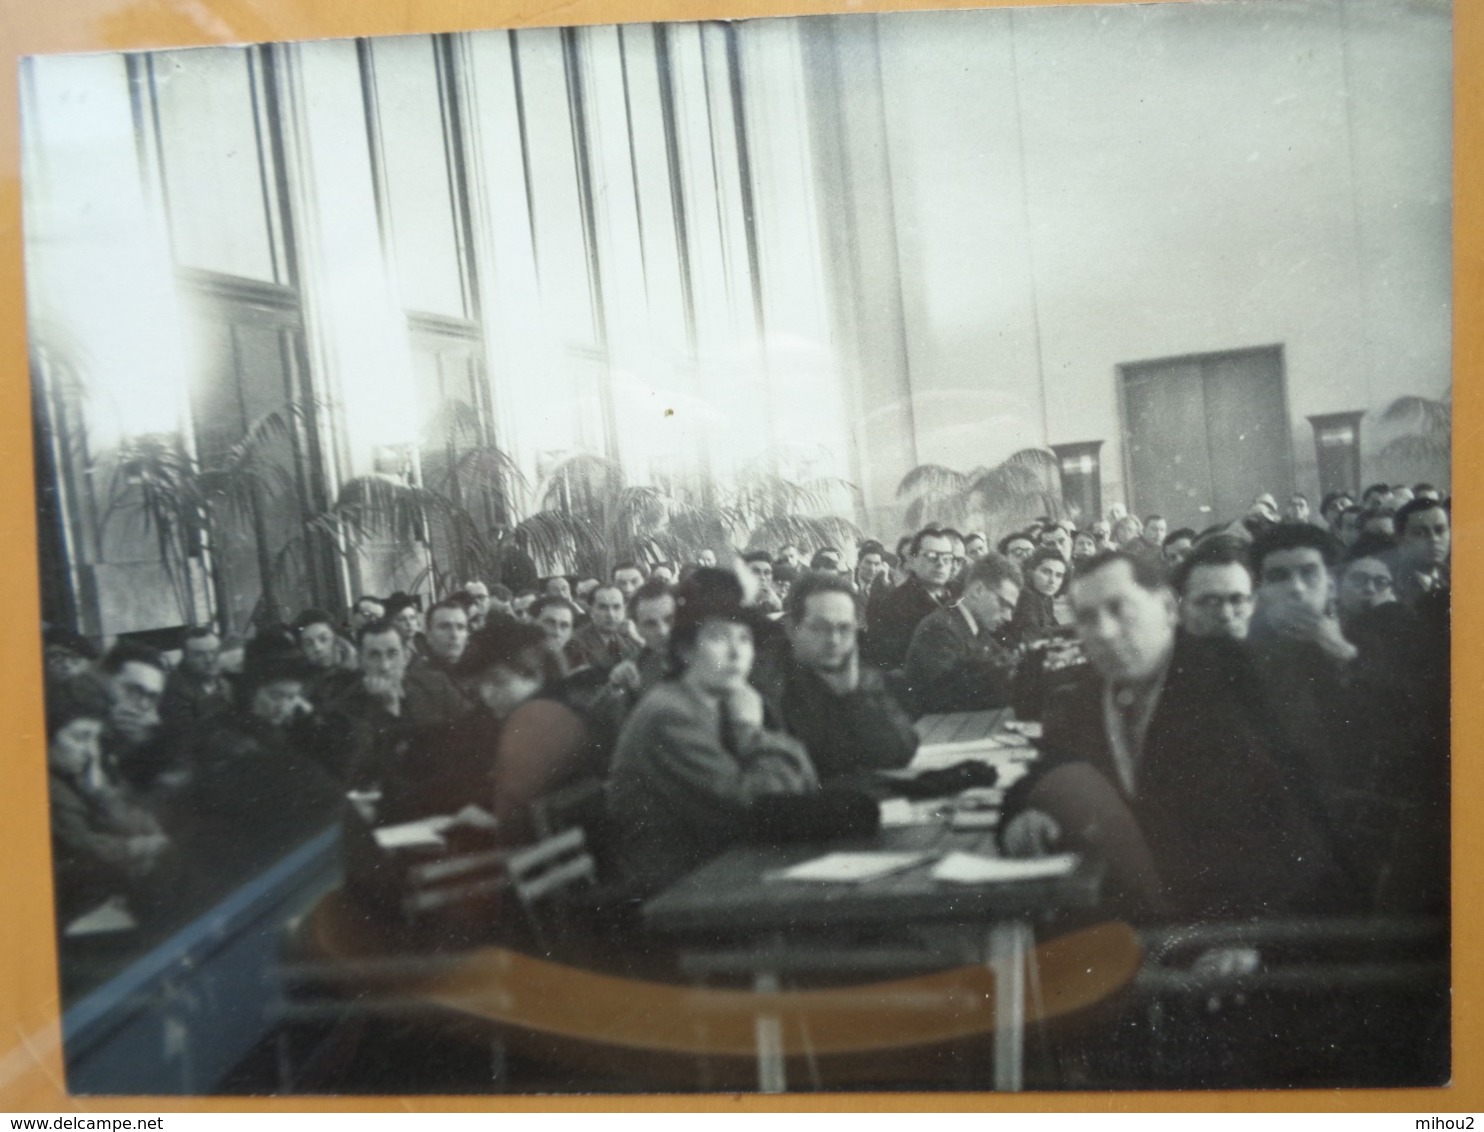 11 PHOTOS FRONT NATIONAL LIBERATION RESISTANCE GUERRE CONGRES MANIFESTATION 1945 (?) WW2 24 x 18 cm